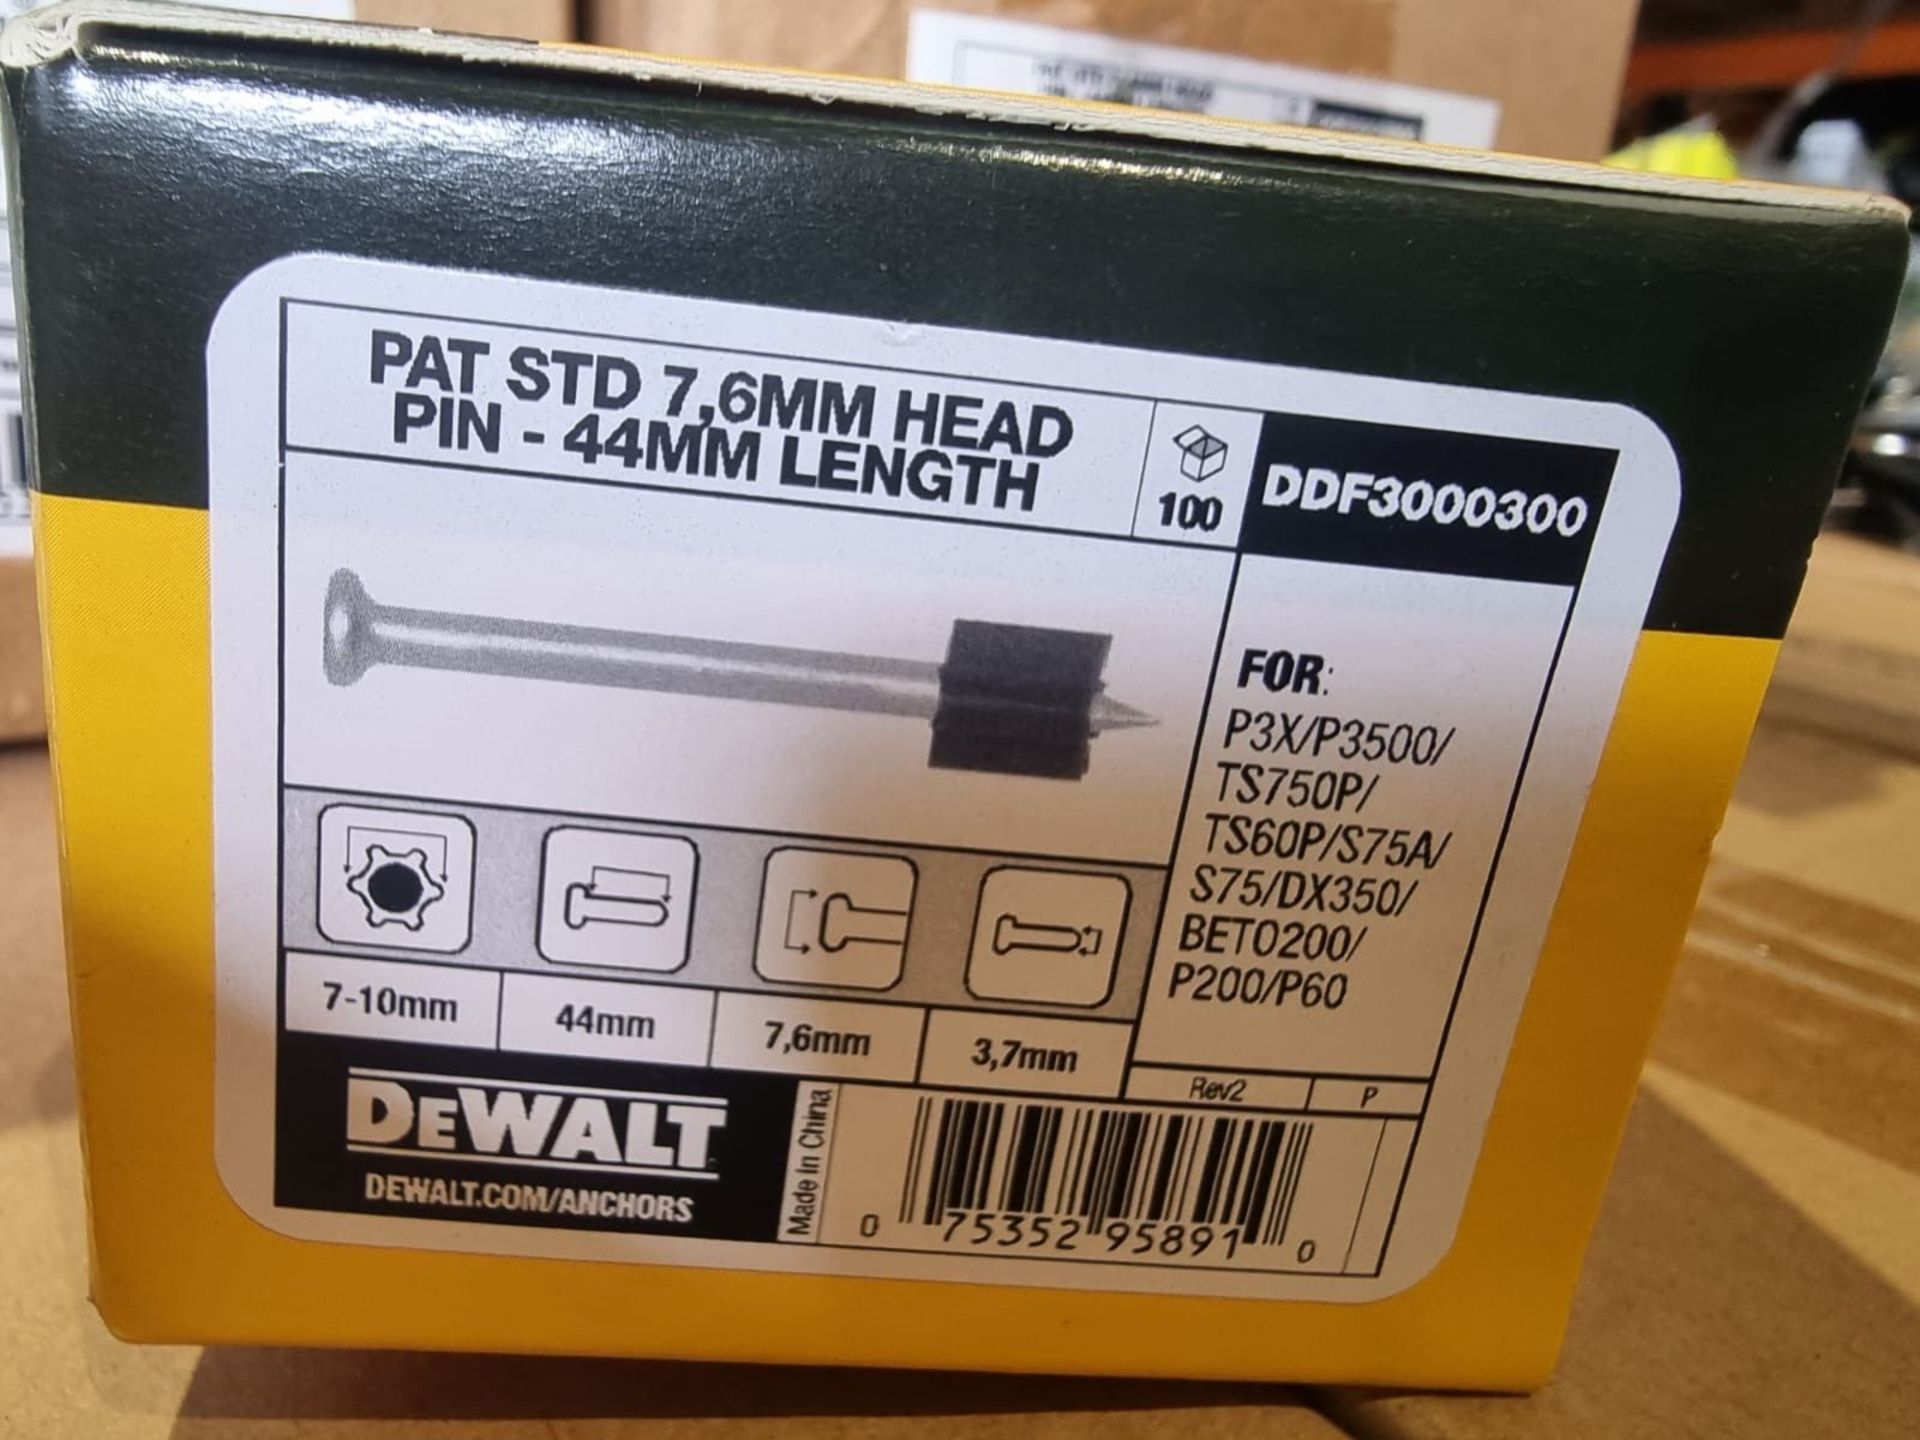 Trade Lot 100 x New Boxes of 100 Dewalt PAT Std 7,6mm Head Pin - 44mm Length DDF3000300Universal PAT - Image 3 of 3